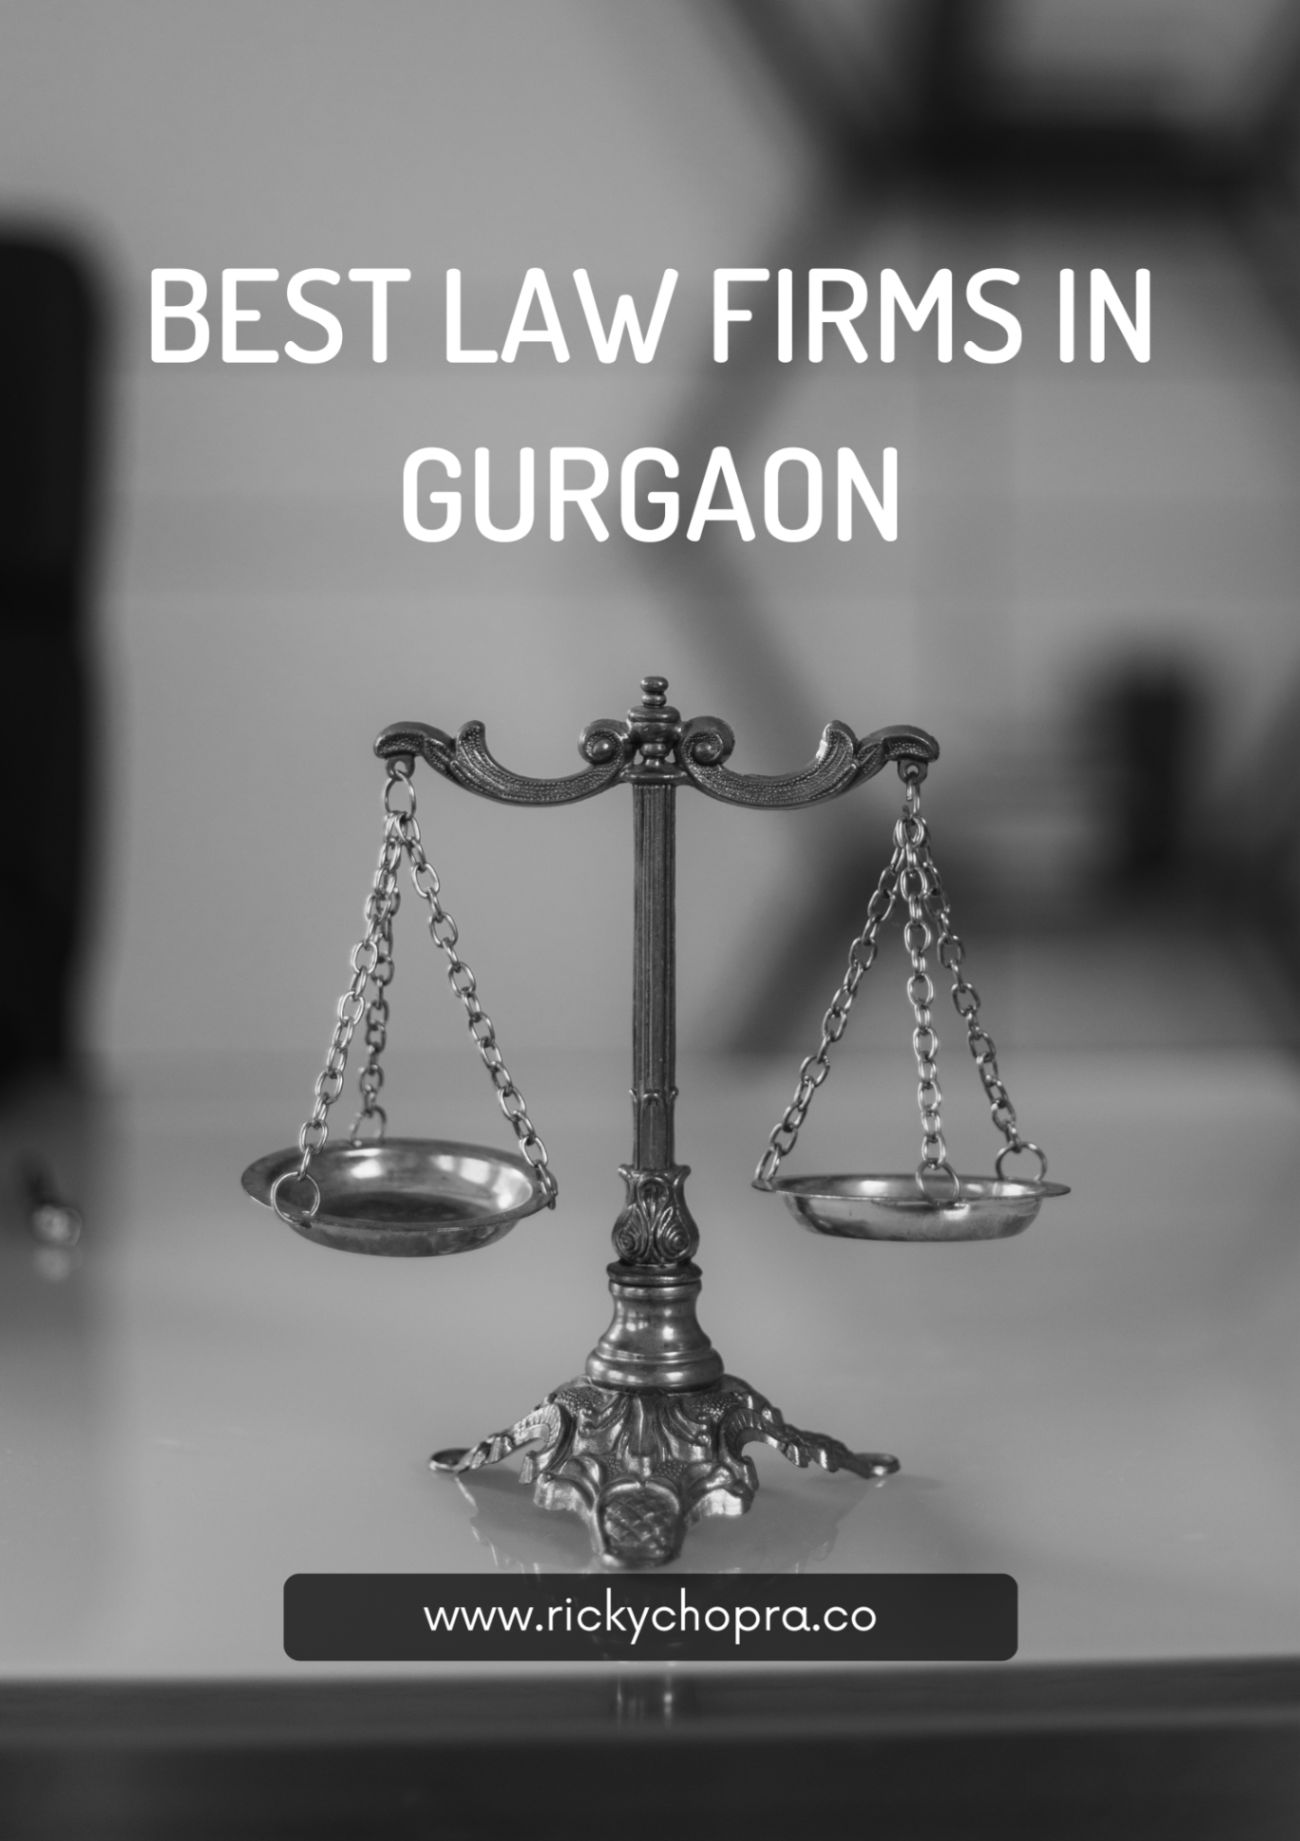 Best Divorce Lawyers in Gurgaon